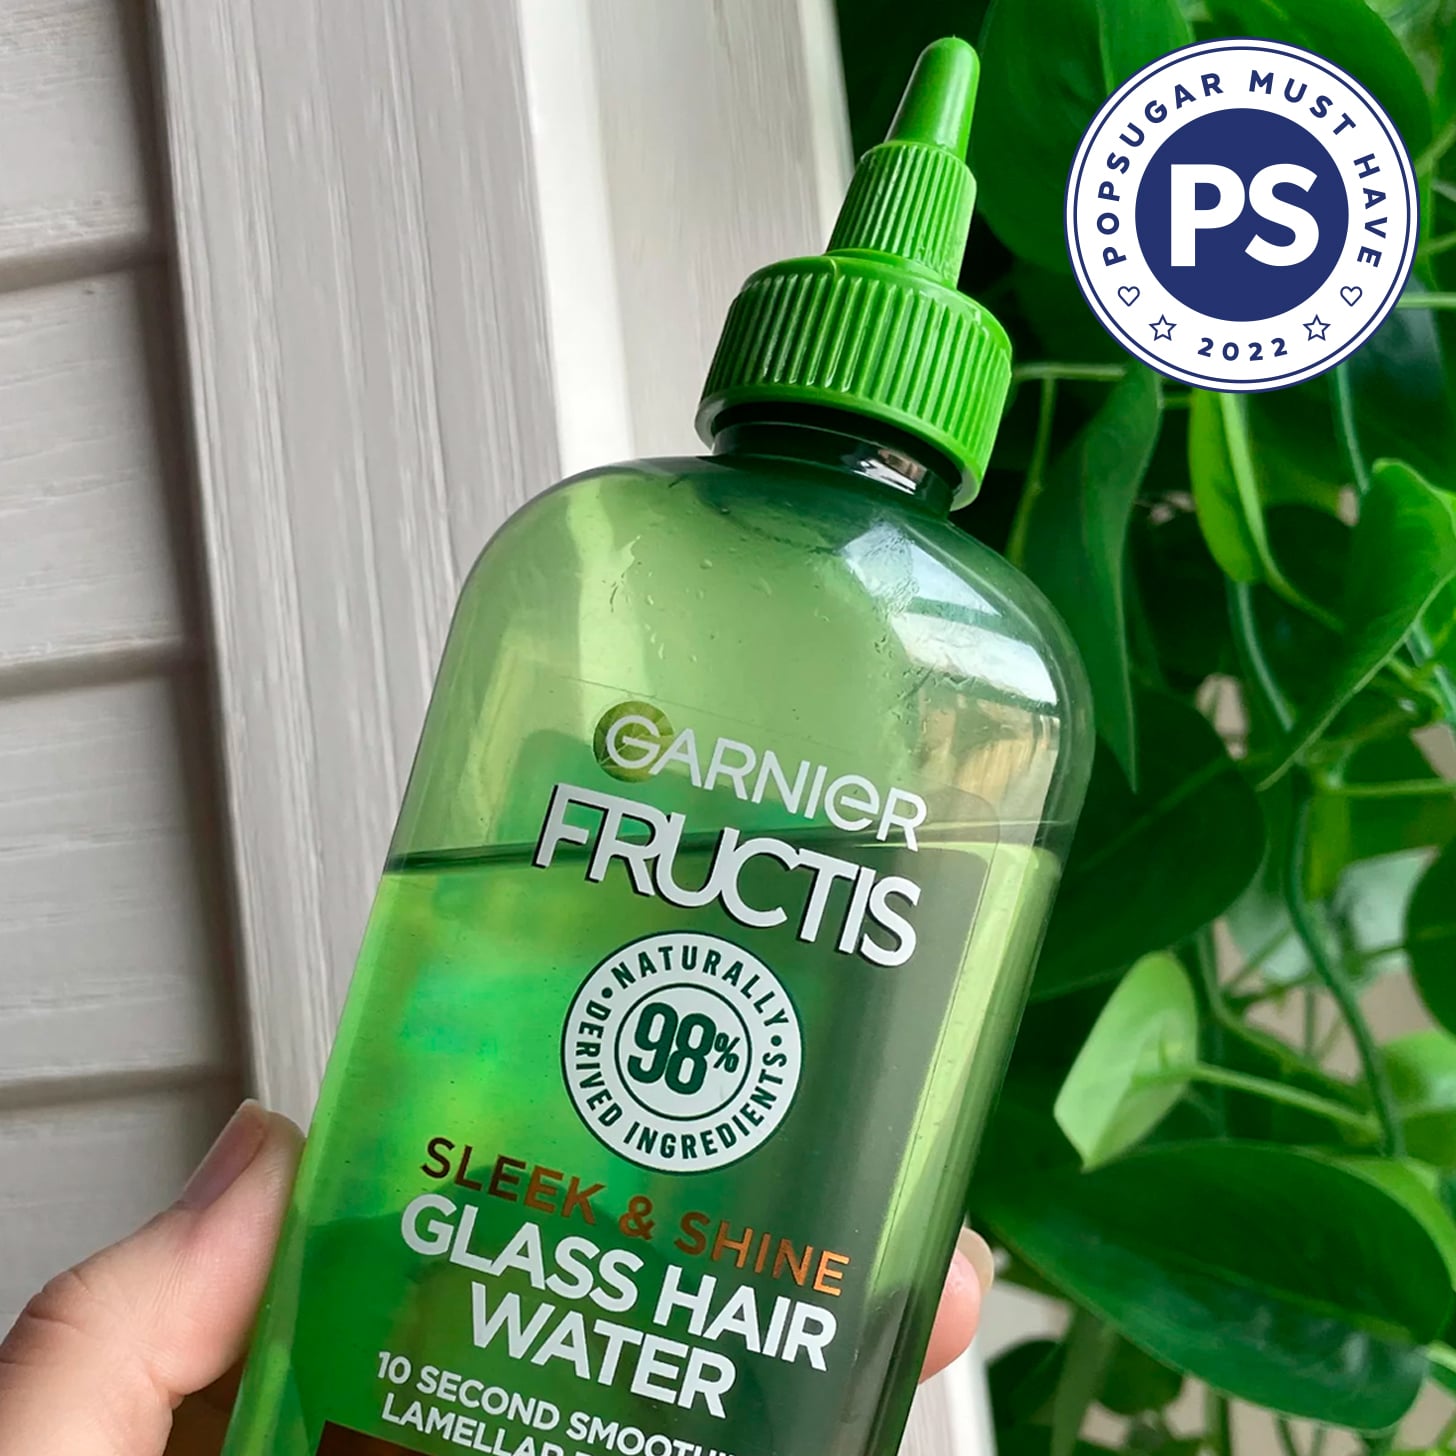 Garnier Sleek & Shine Glass Hair Water Review With Photos | POPSUGAR Beauty